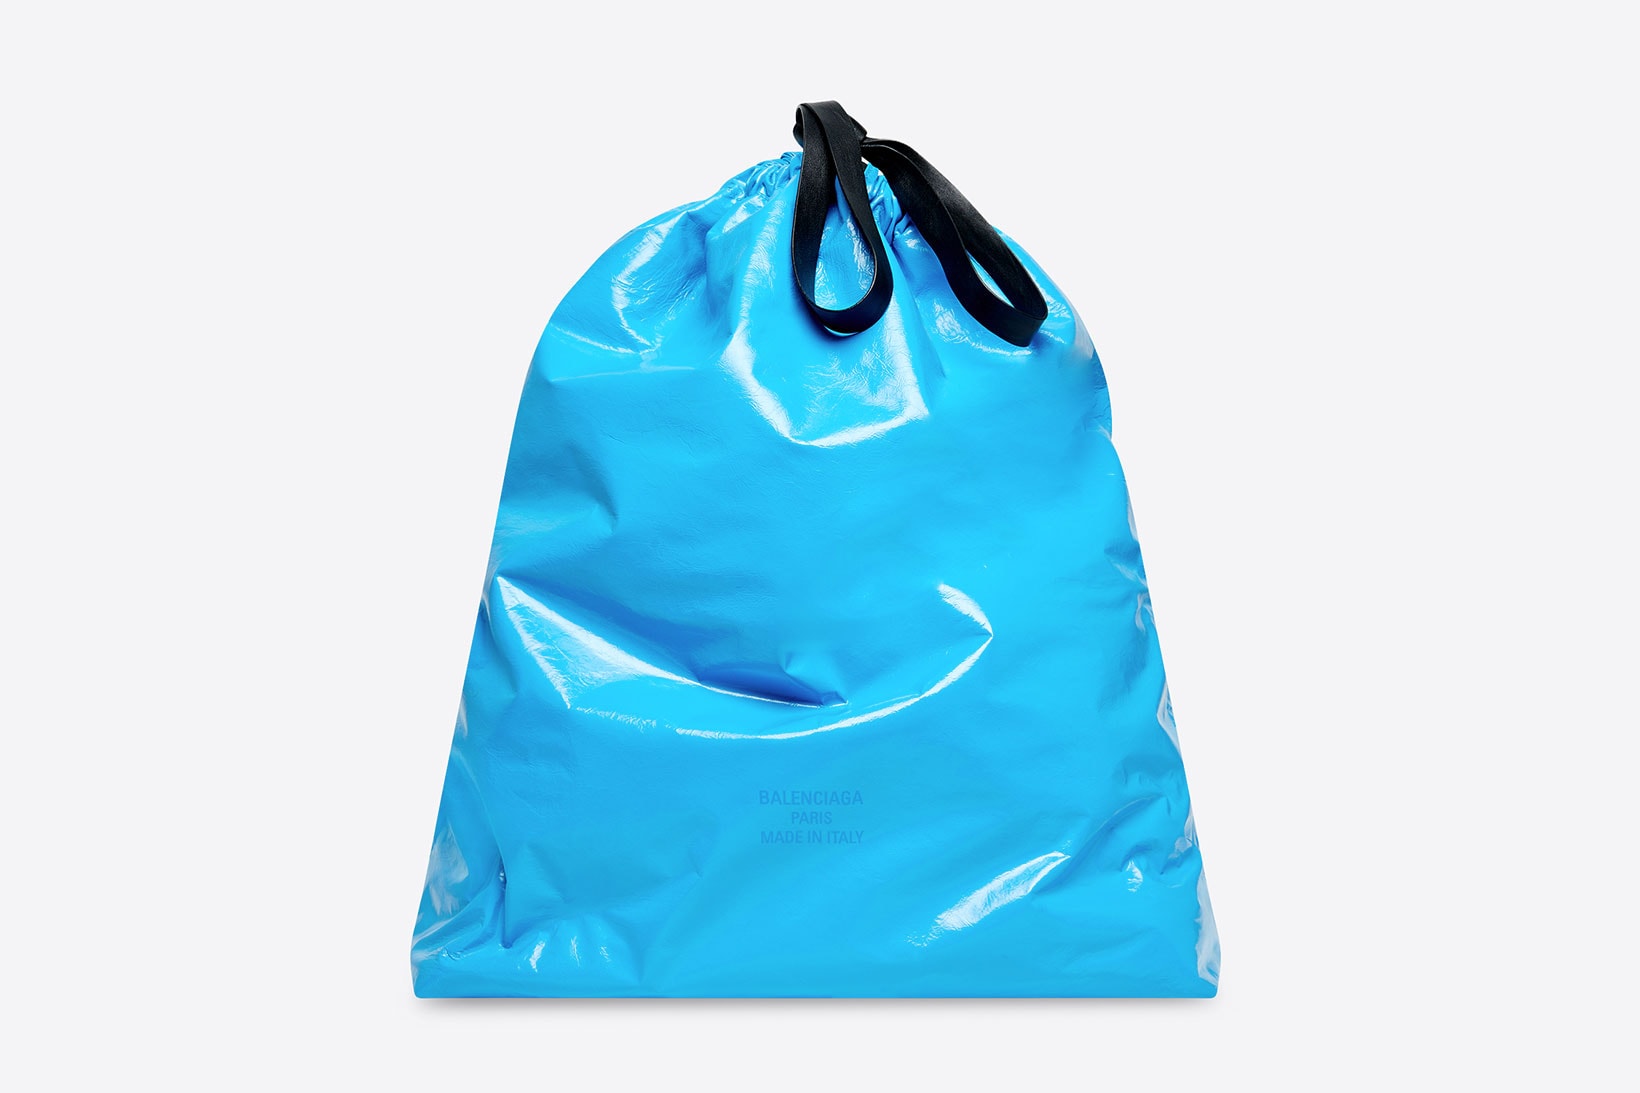 The Balenciaga trash bag retailing for $2.5k.